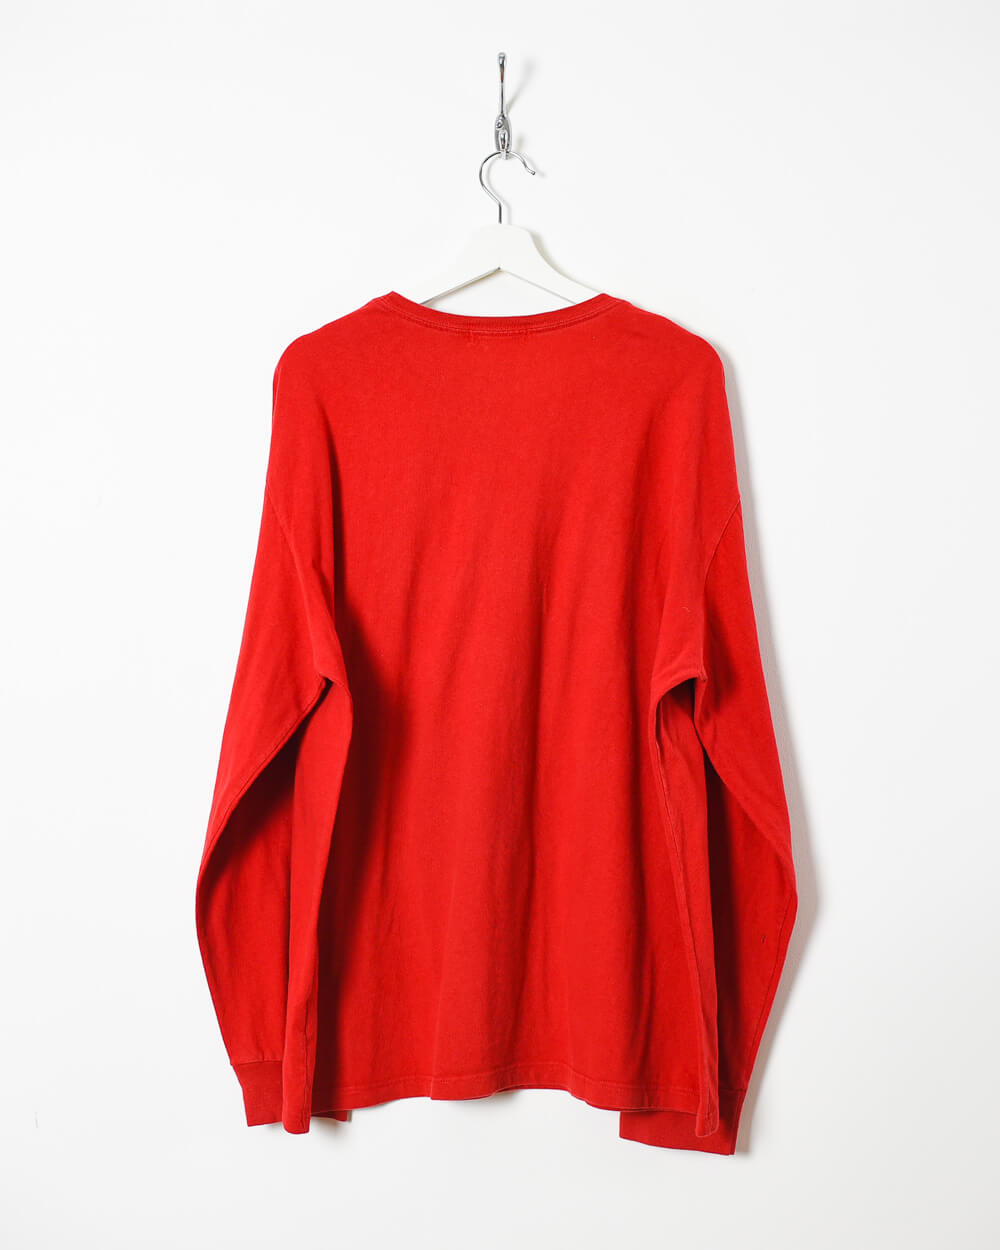 Red Ralph Lauren Polo Sweatshirt - X-Large